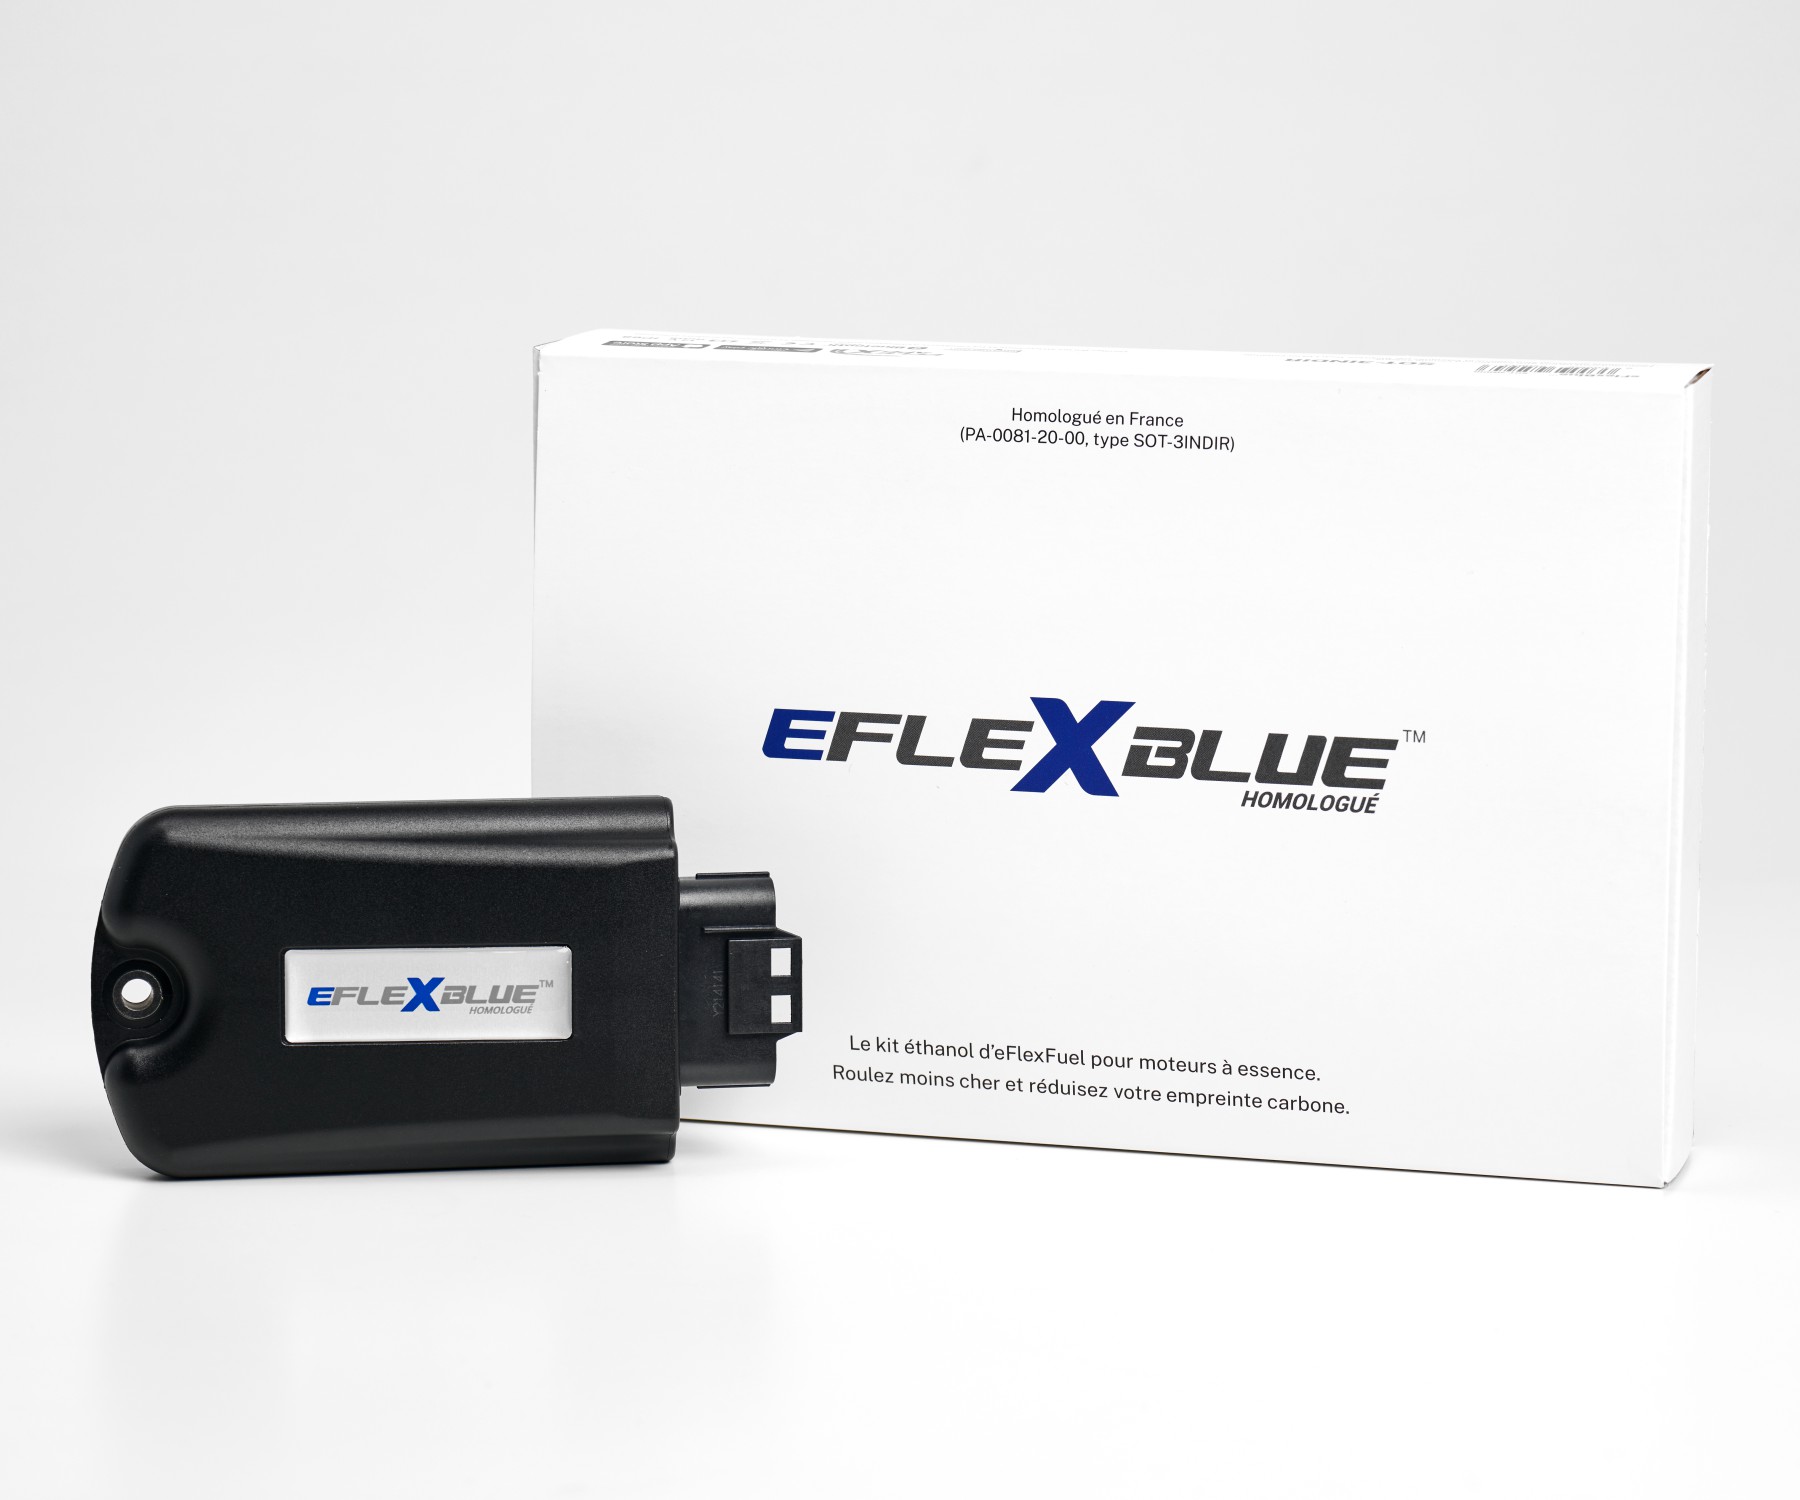 eFlexBlue